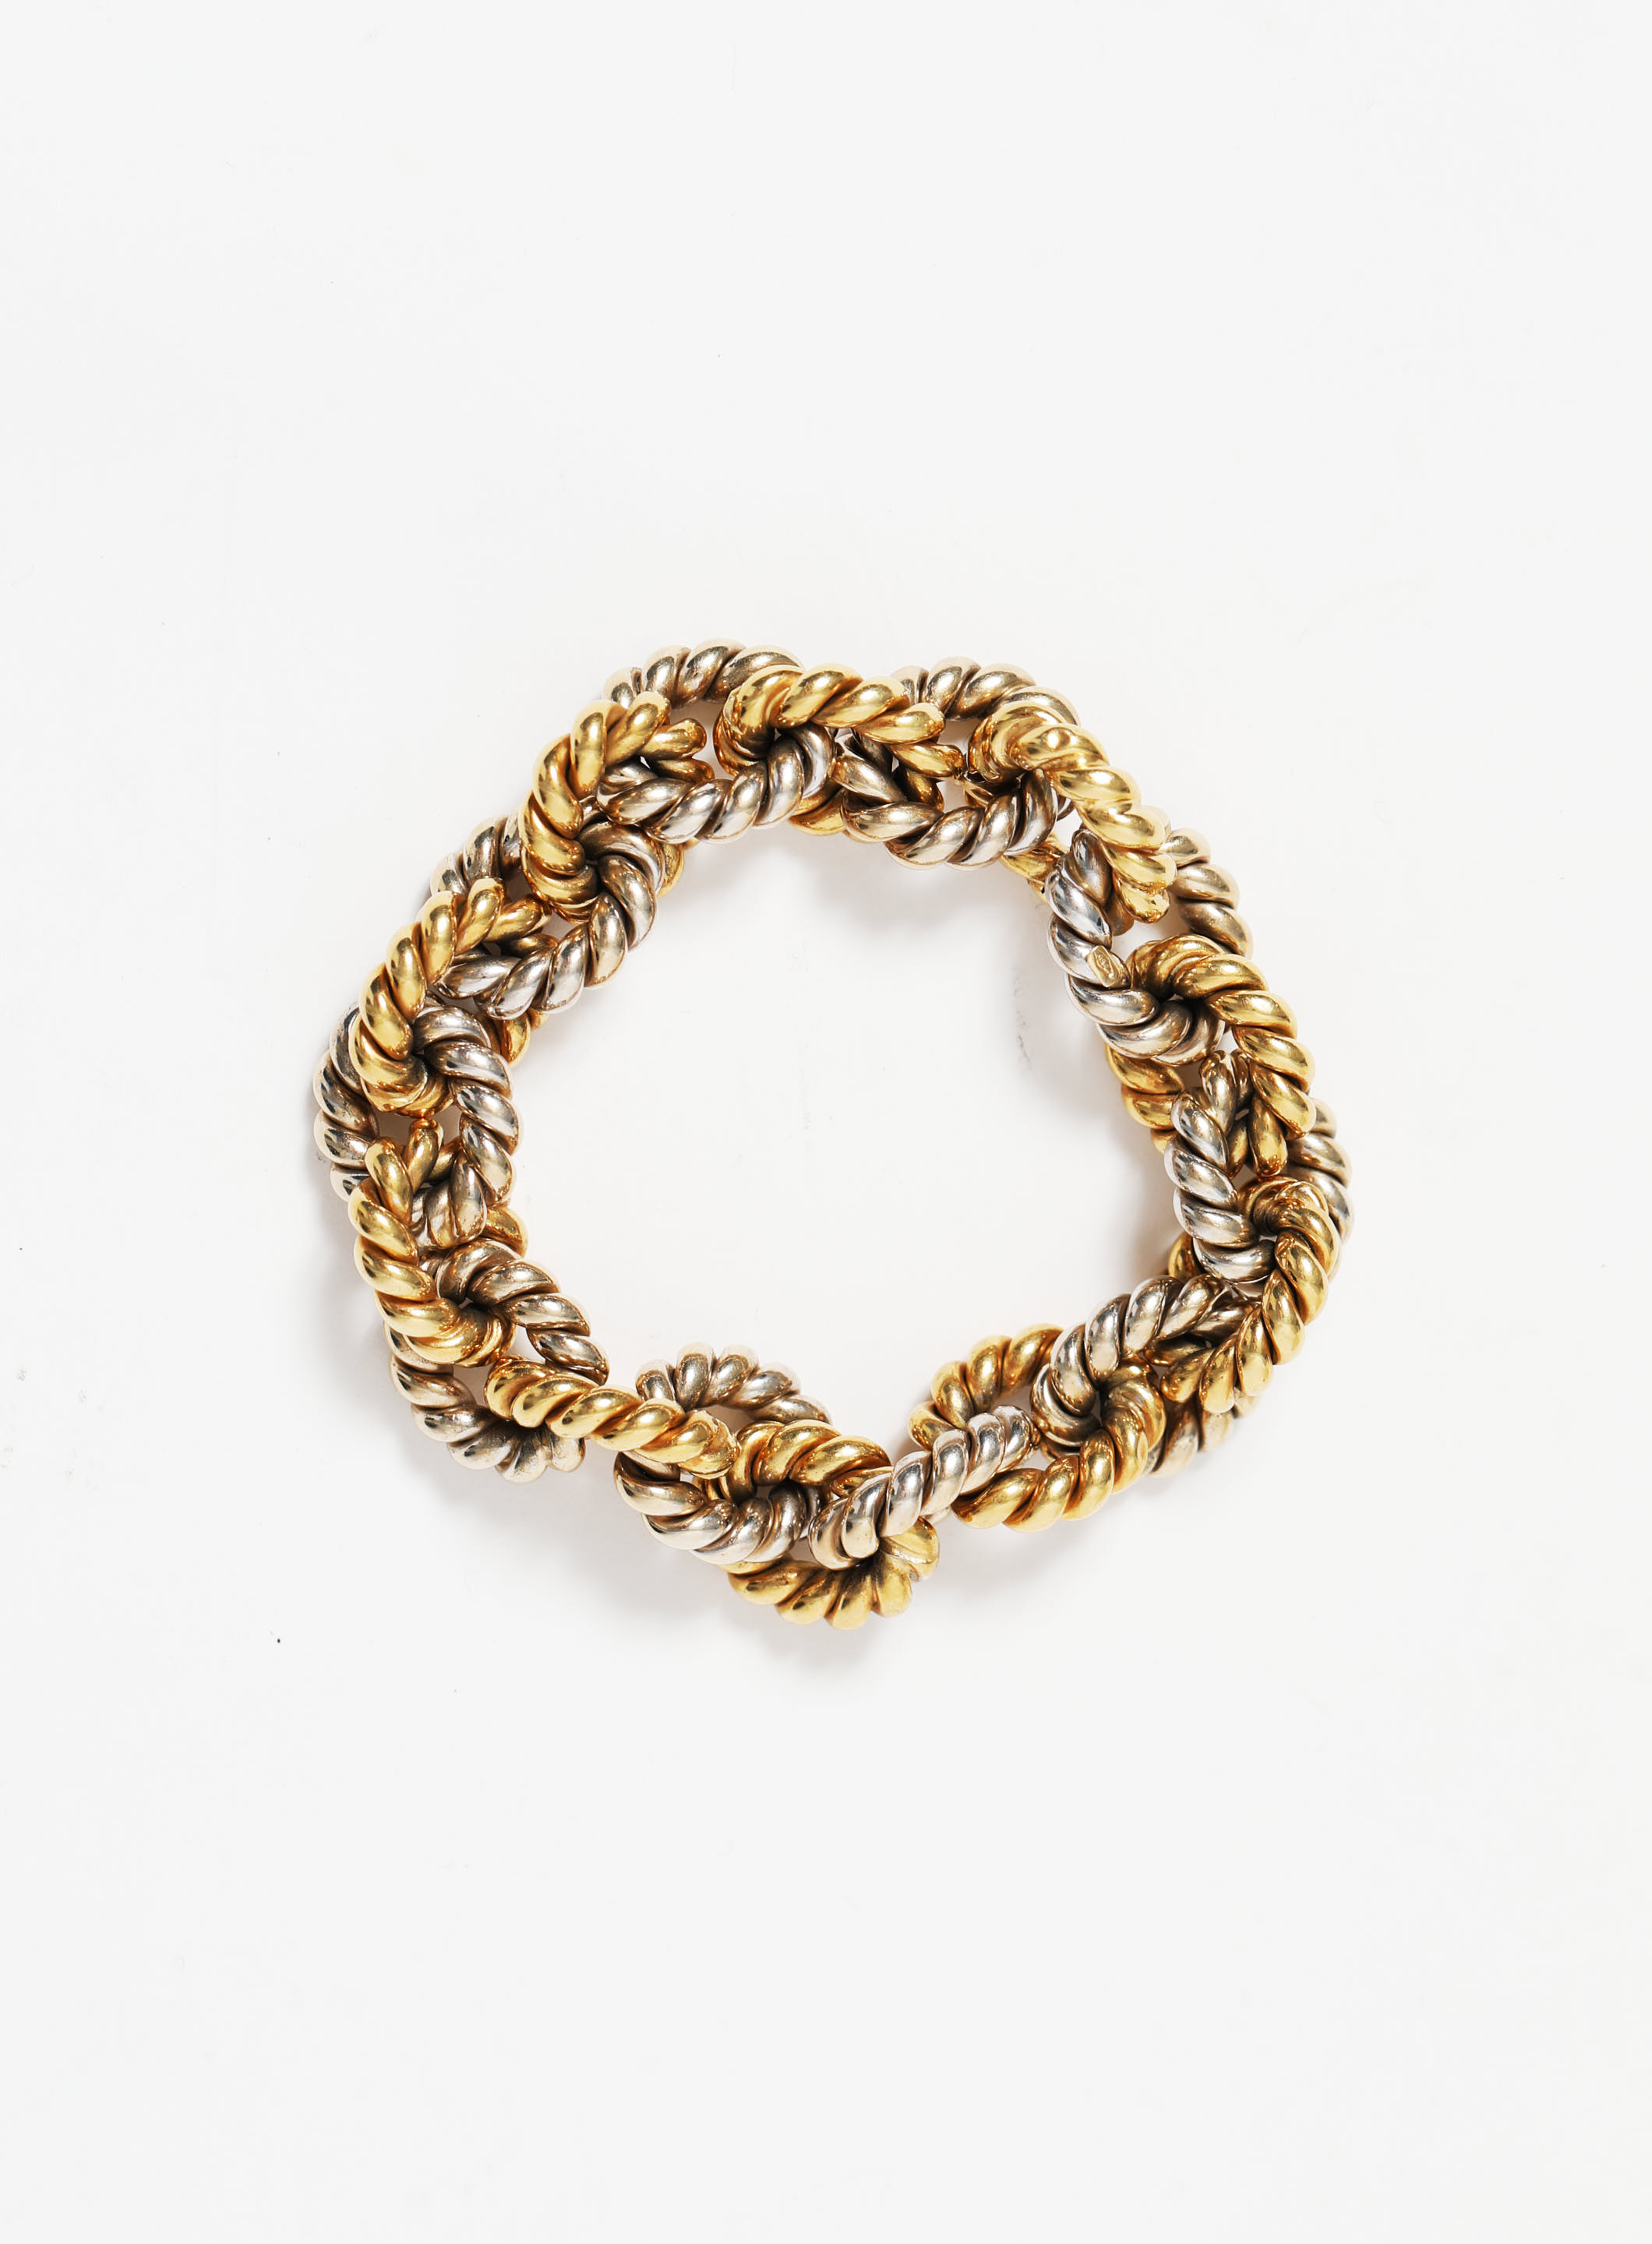 Vintage 18k Yellow Gold Chainlink Bracelet, Authentic & Vintage